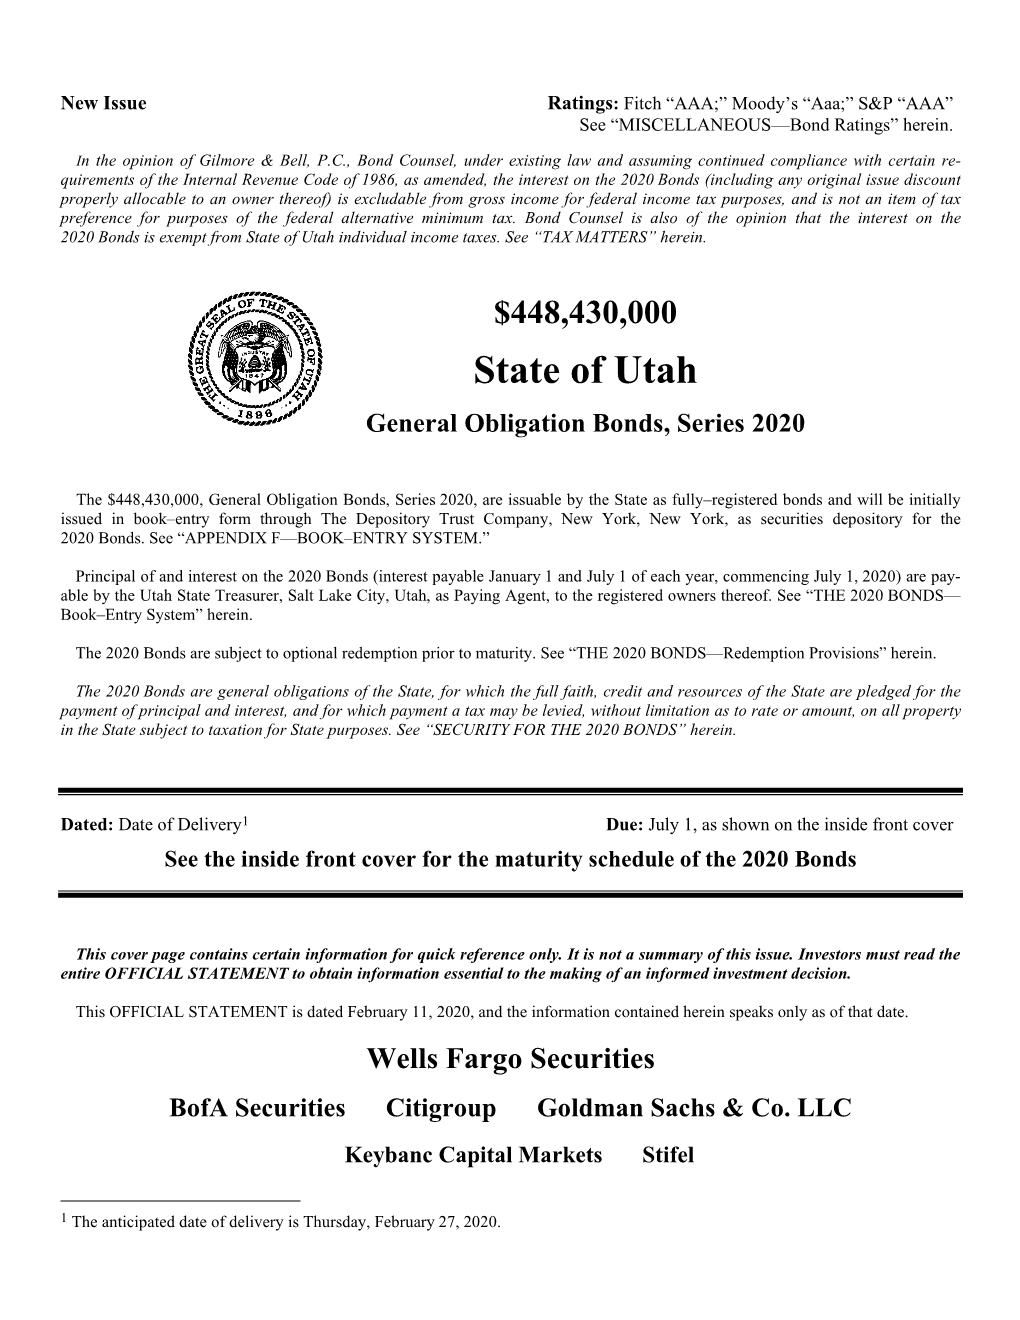 State of Utah General Obligation Bonds, Series 2020 (PDF)